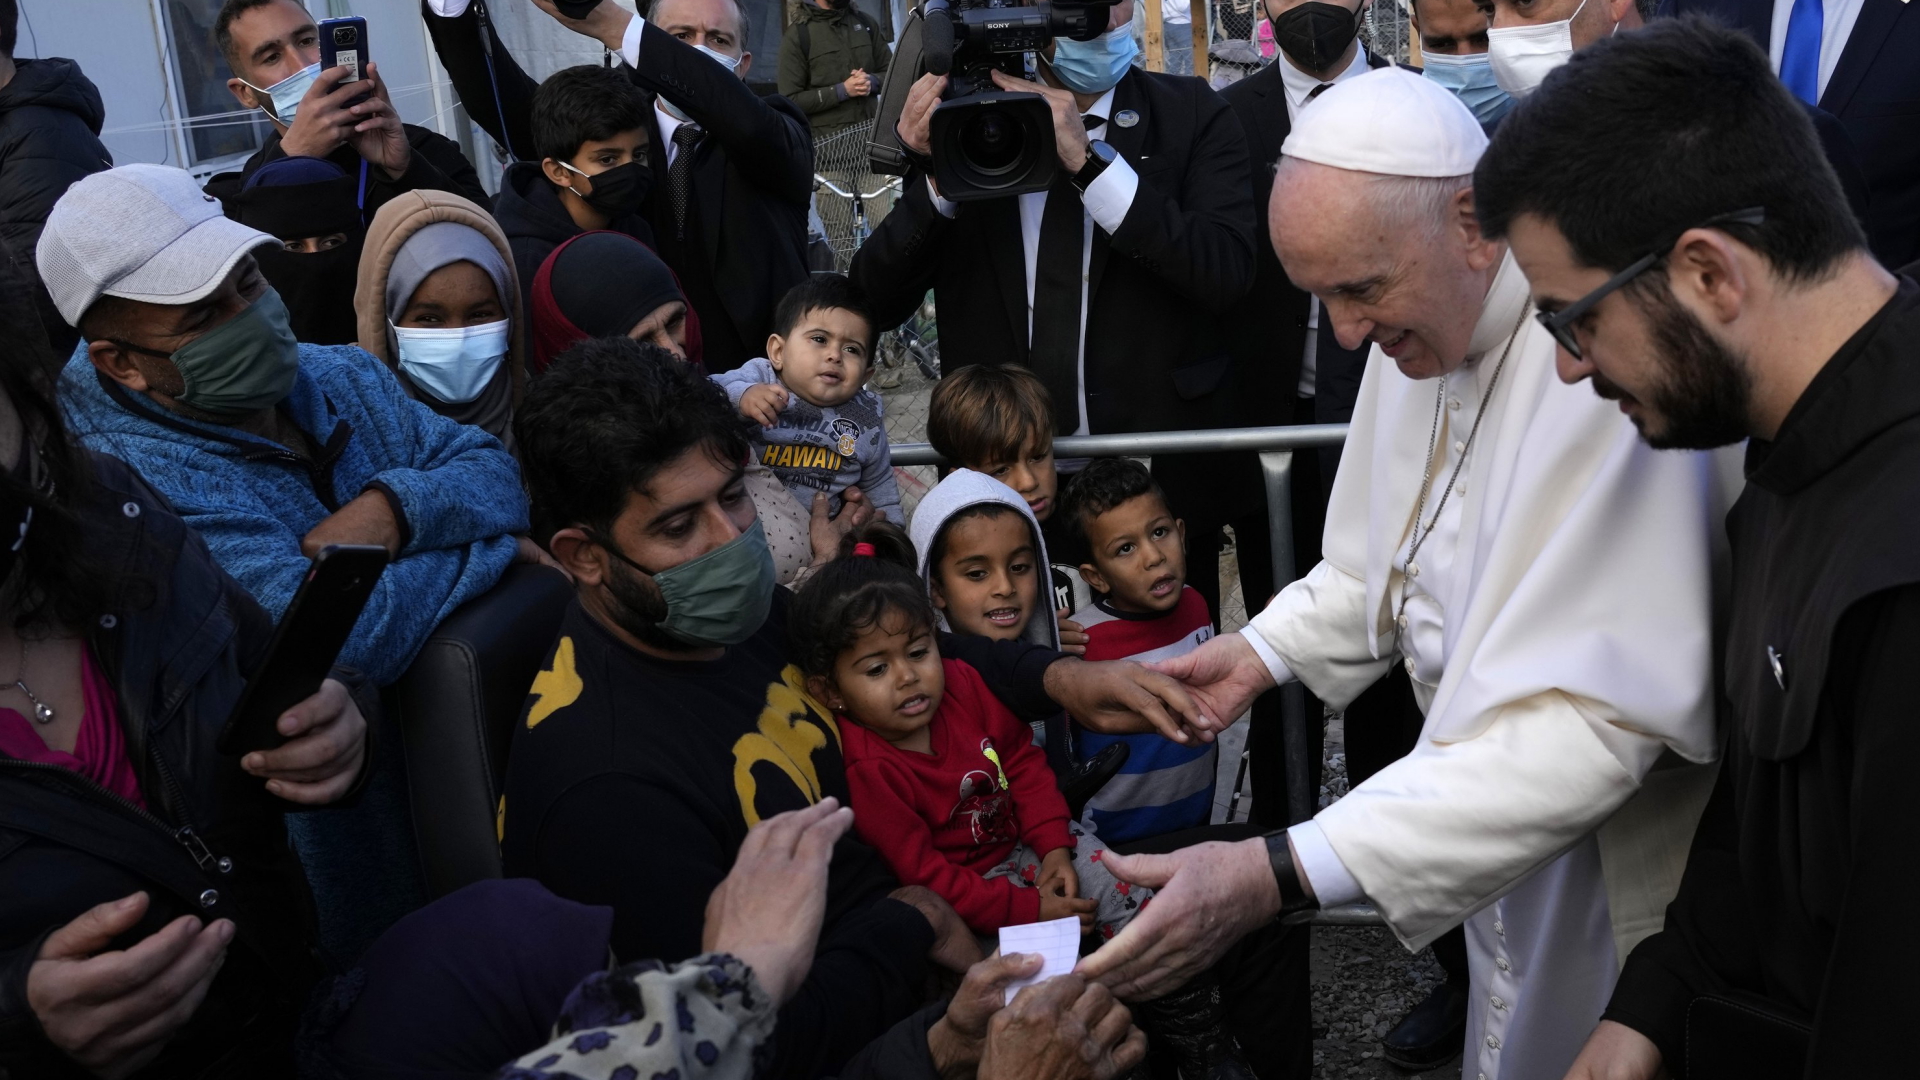 Papst zu Flüchtlingspolitik: Menschenrechte statt Mauern